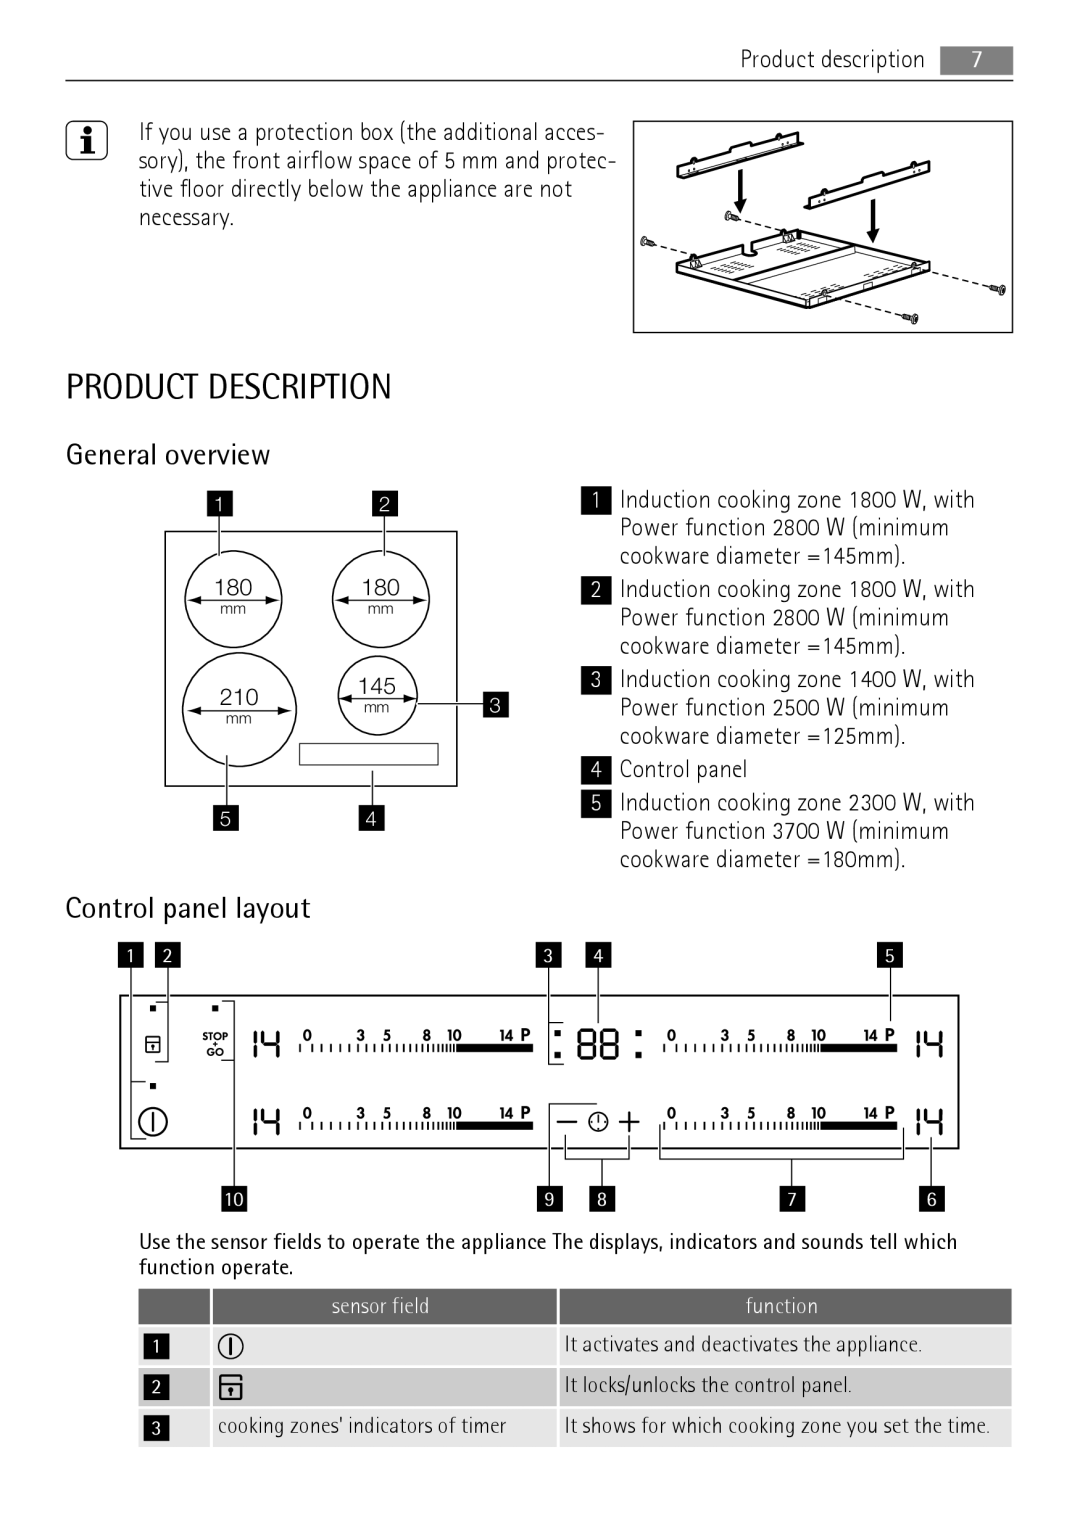 AEG HK654200FB user manual Product Description, General overview, Control panel layout, sensor field, function 